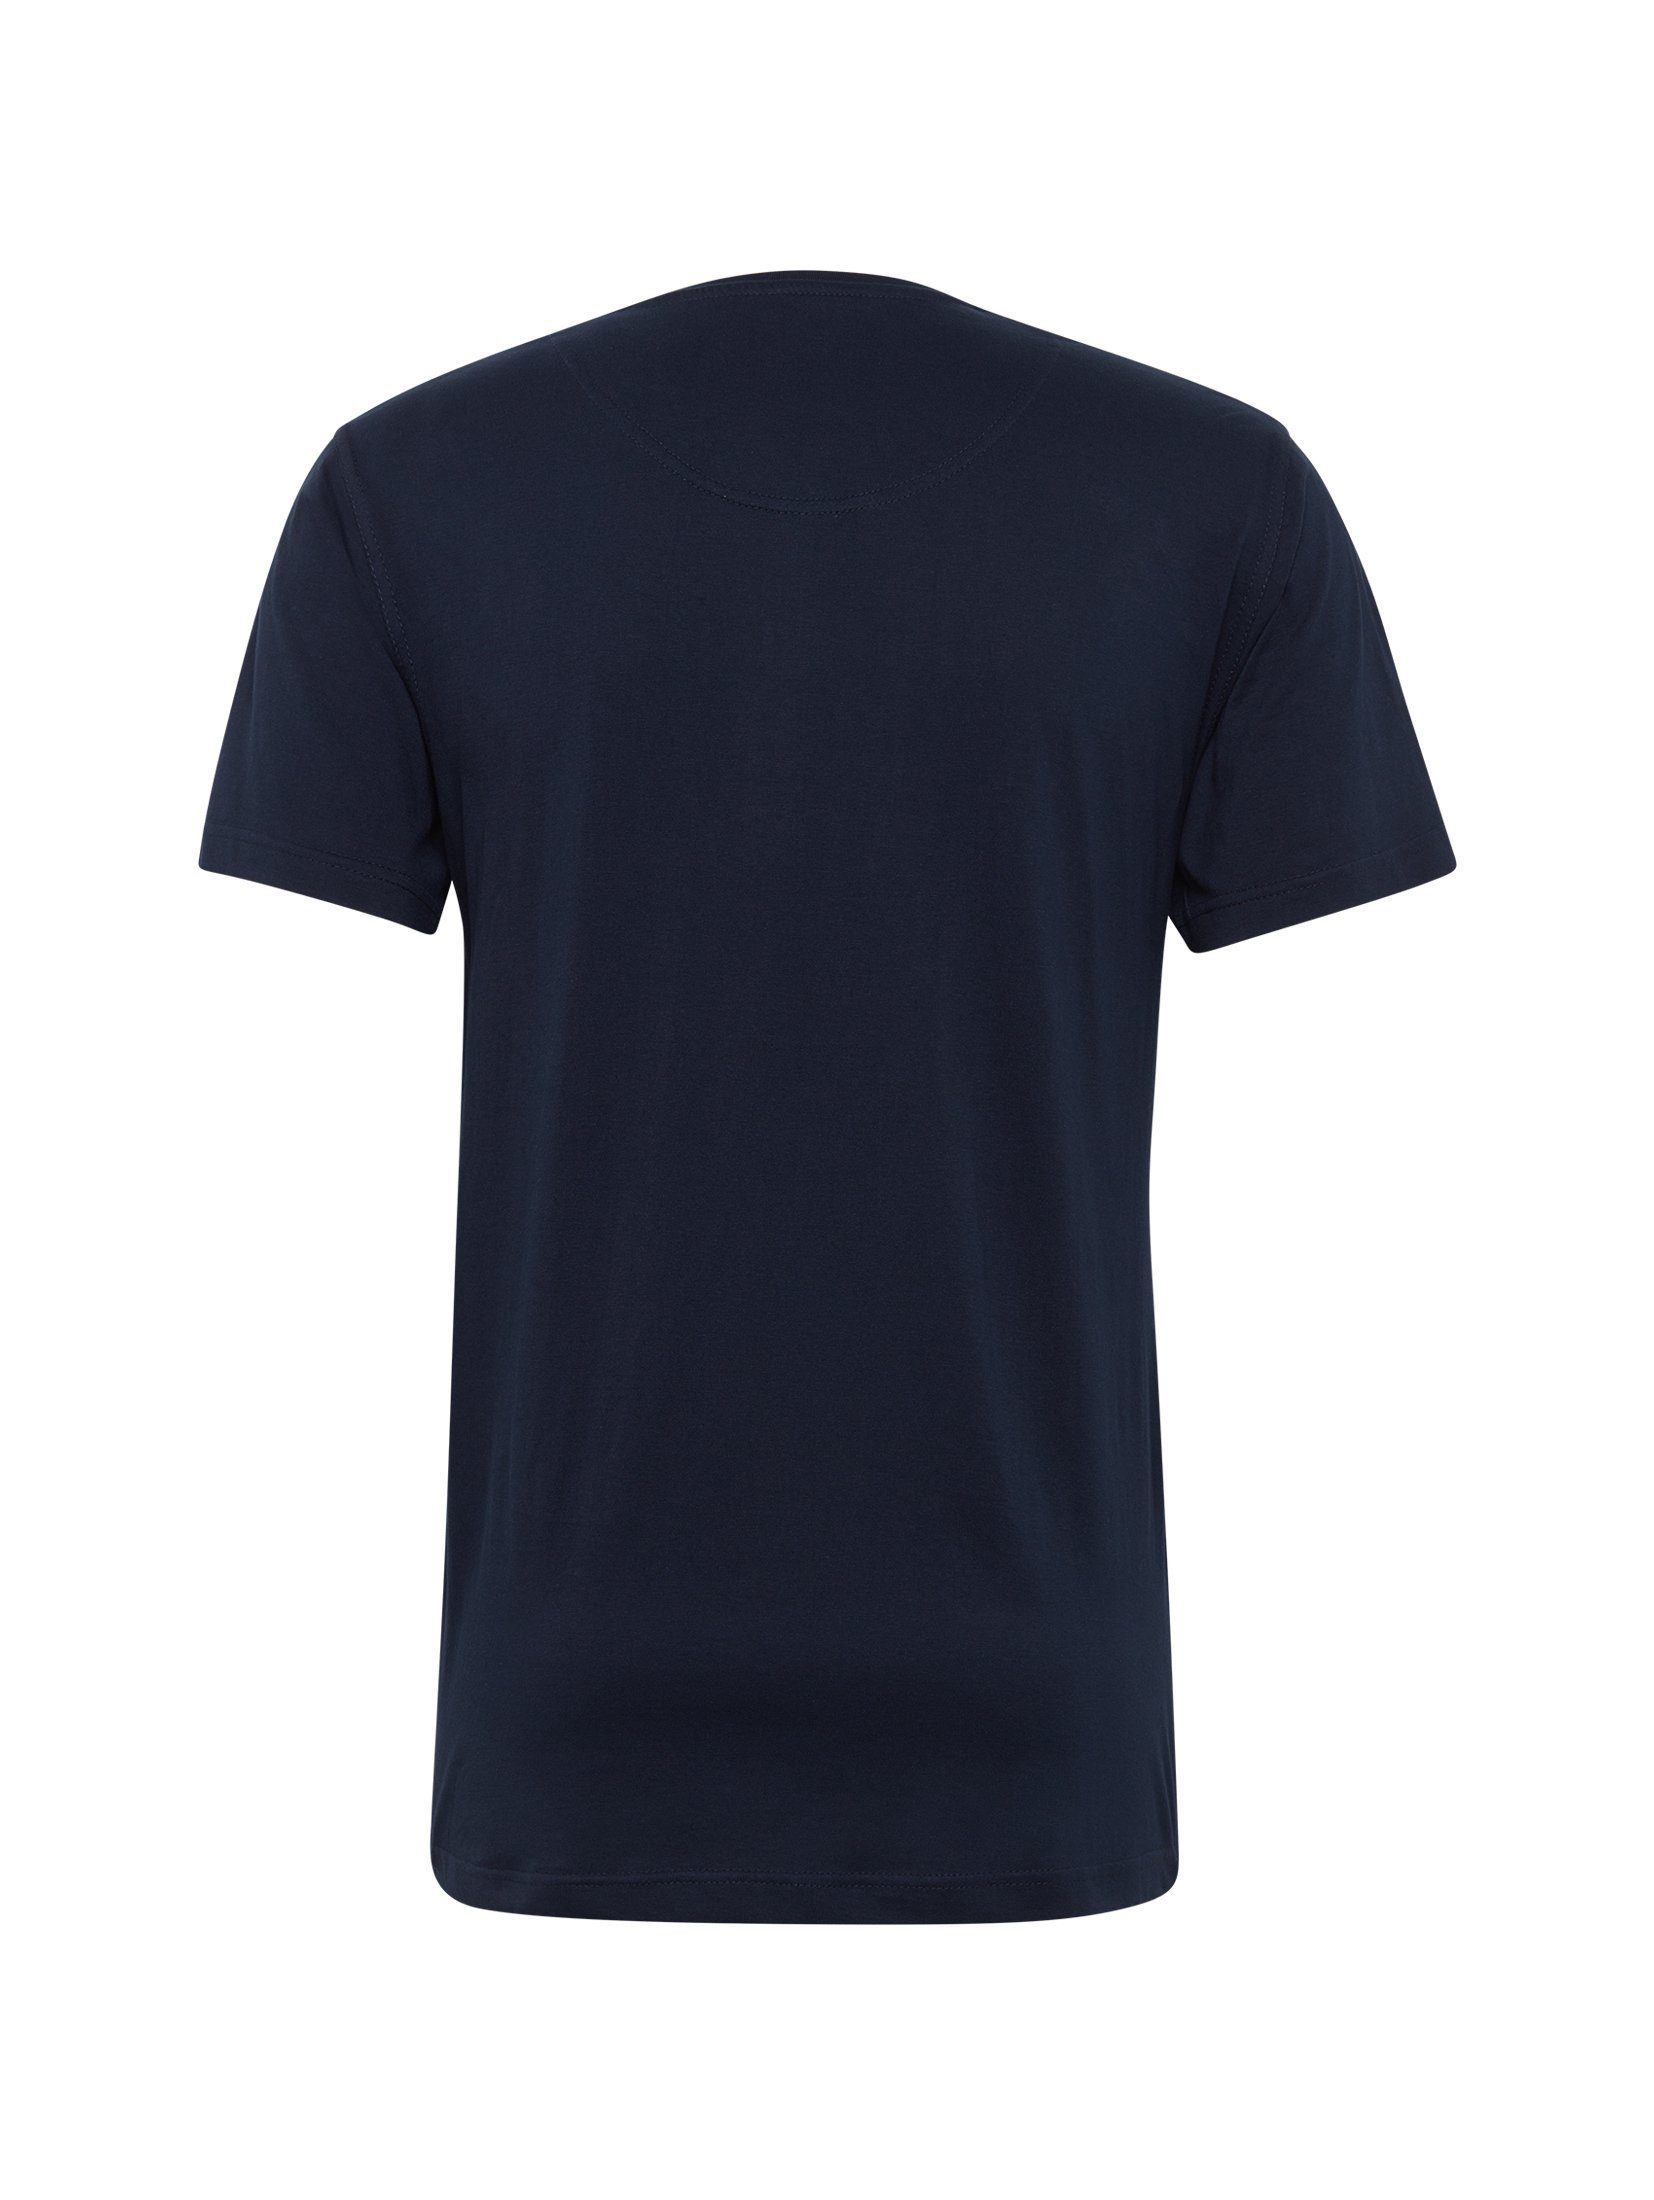 blau-dunkel-uni Pyjamaoberteil T-Shirt TAILOR TOM Pyjama